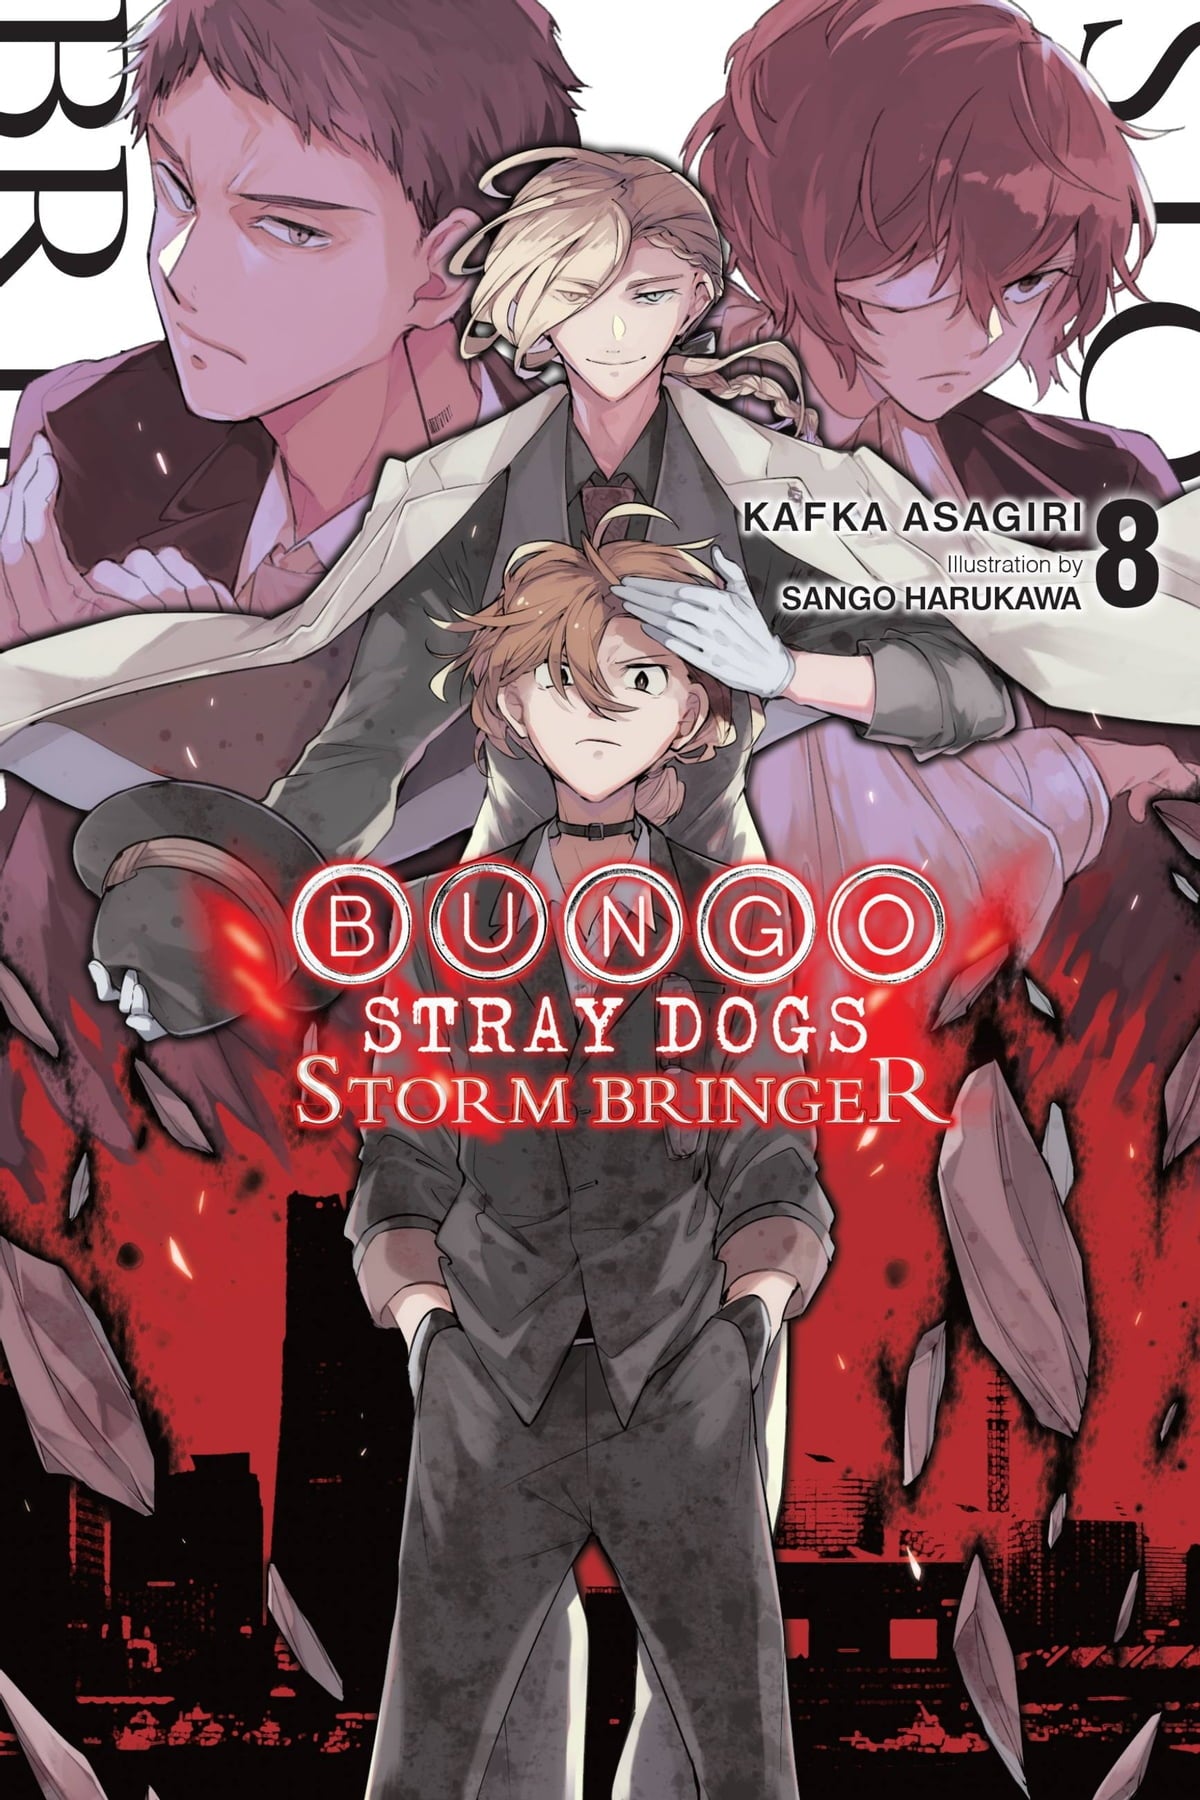 Bungo Stray Dogs Vol. 08 (Light Novel): Storm Bringer